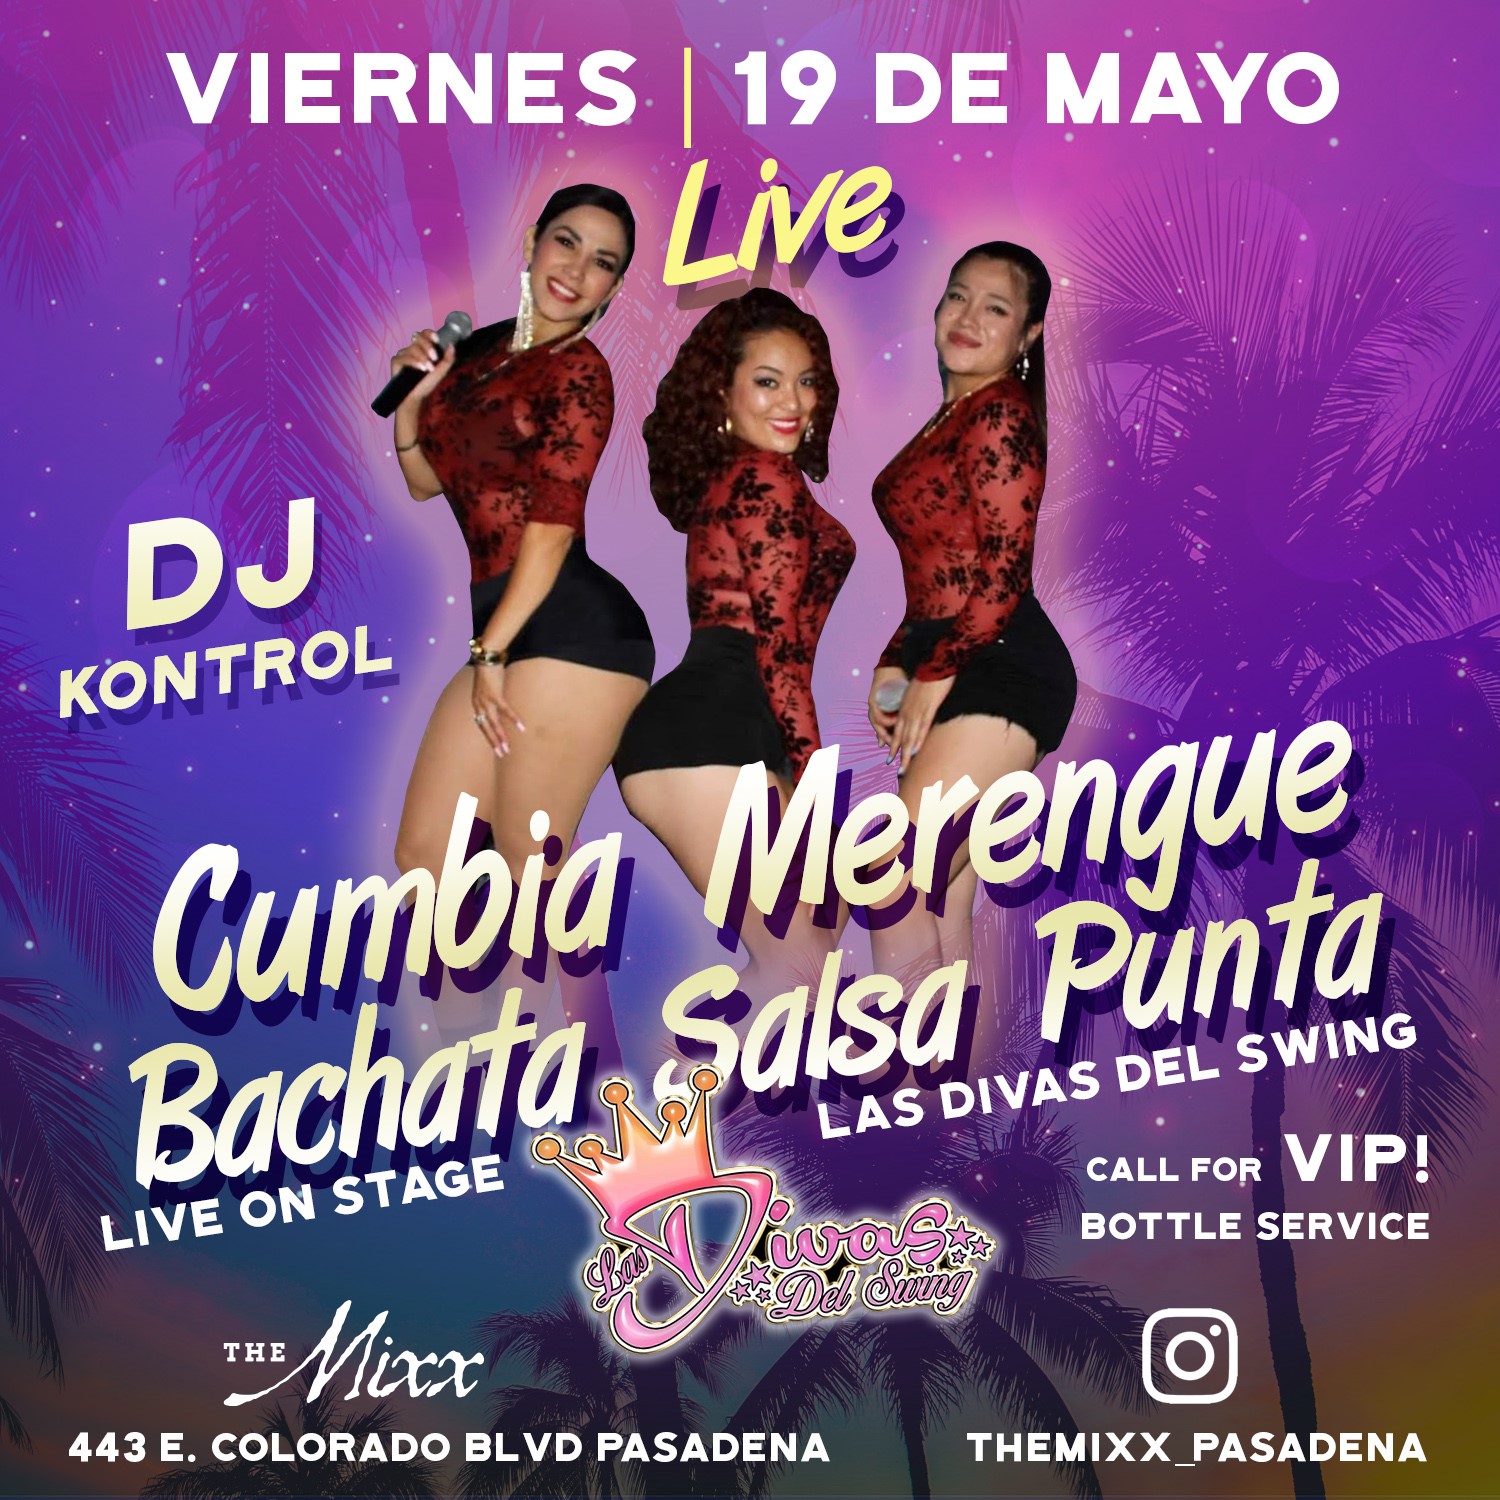 You are currently viewing Live Merengue Bachata Salsa Cumbia with Las Divas Del Swing en VIVO